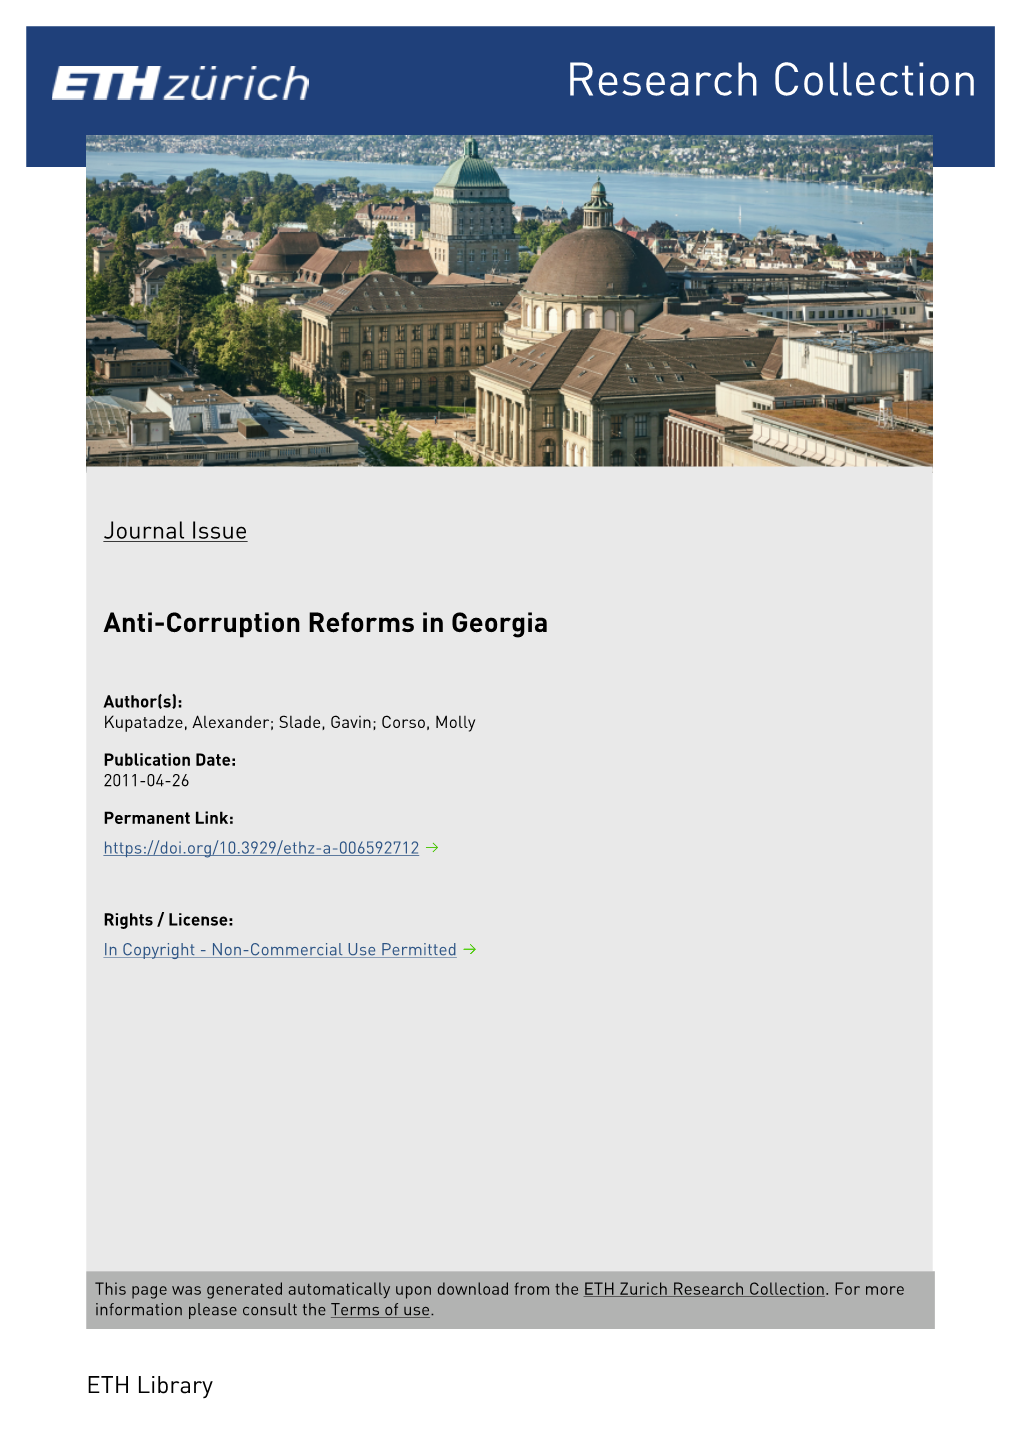 Anti-Corruption Reforms in Georgia